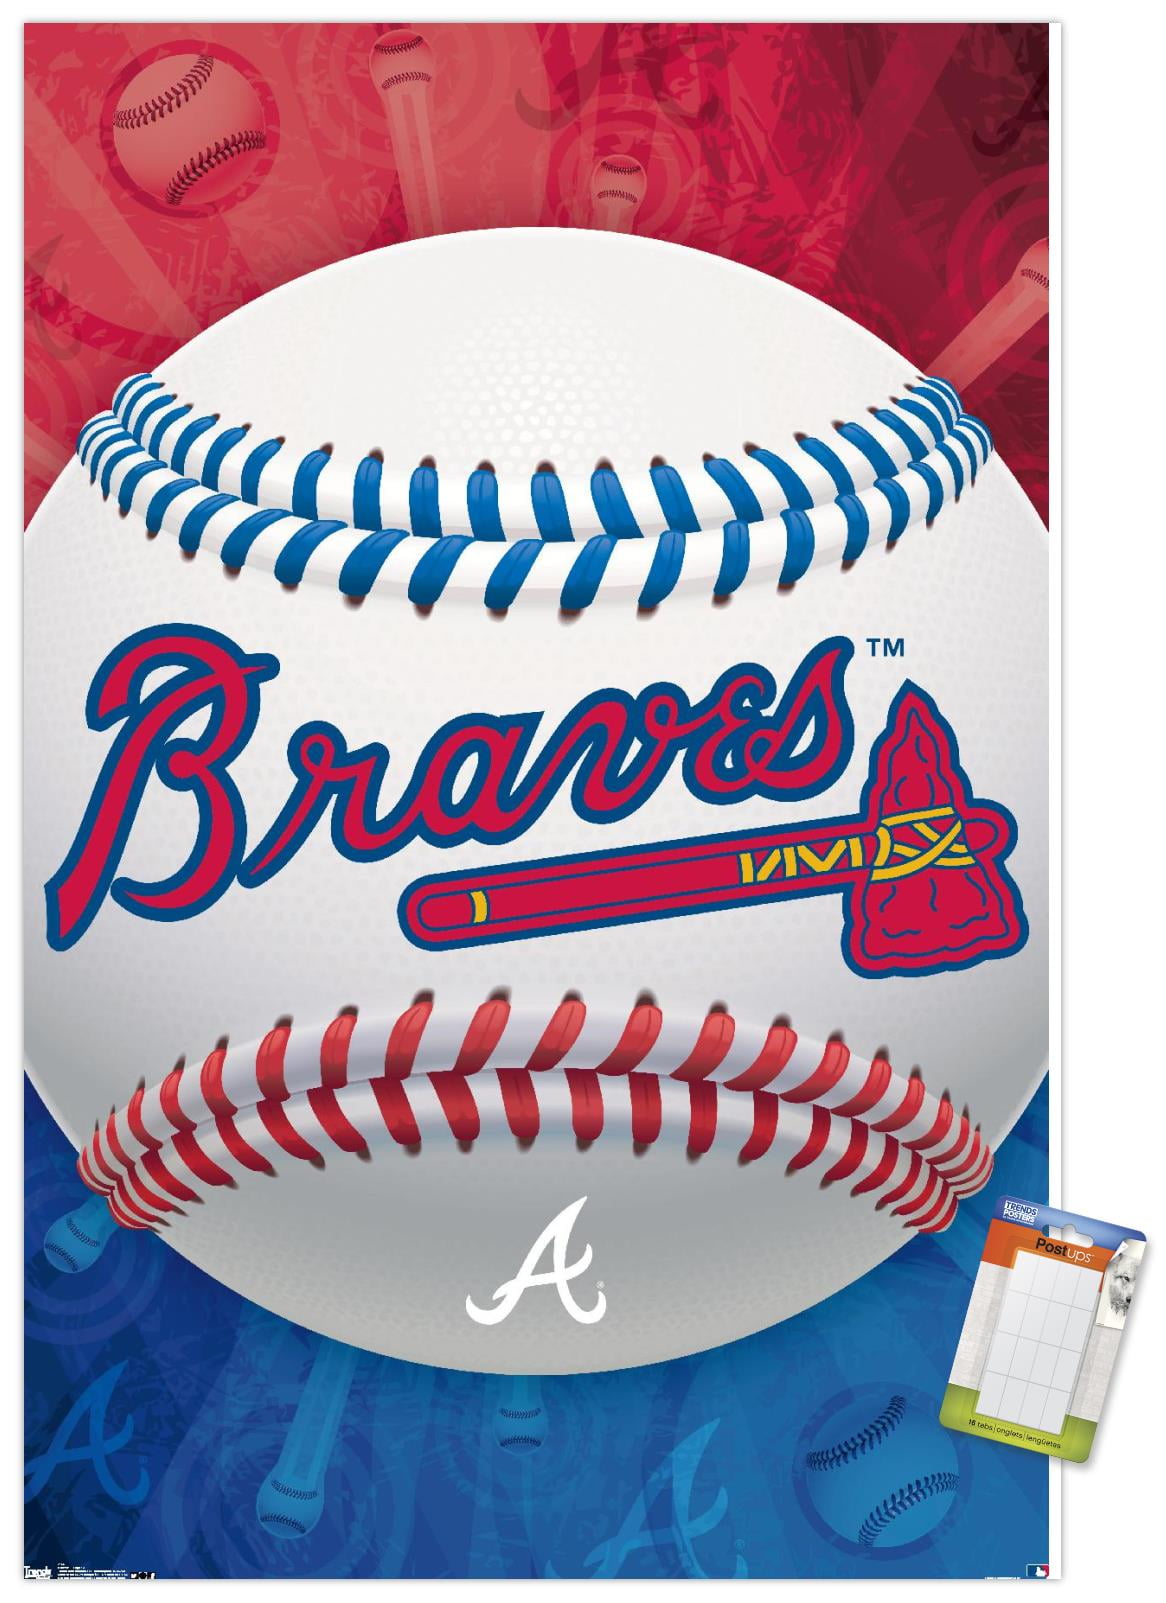 MLBs Braves add Atlanta brand Quikrete as patch sponsor  SportBusiness